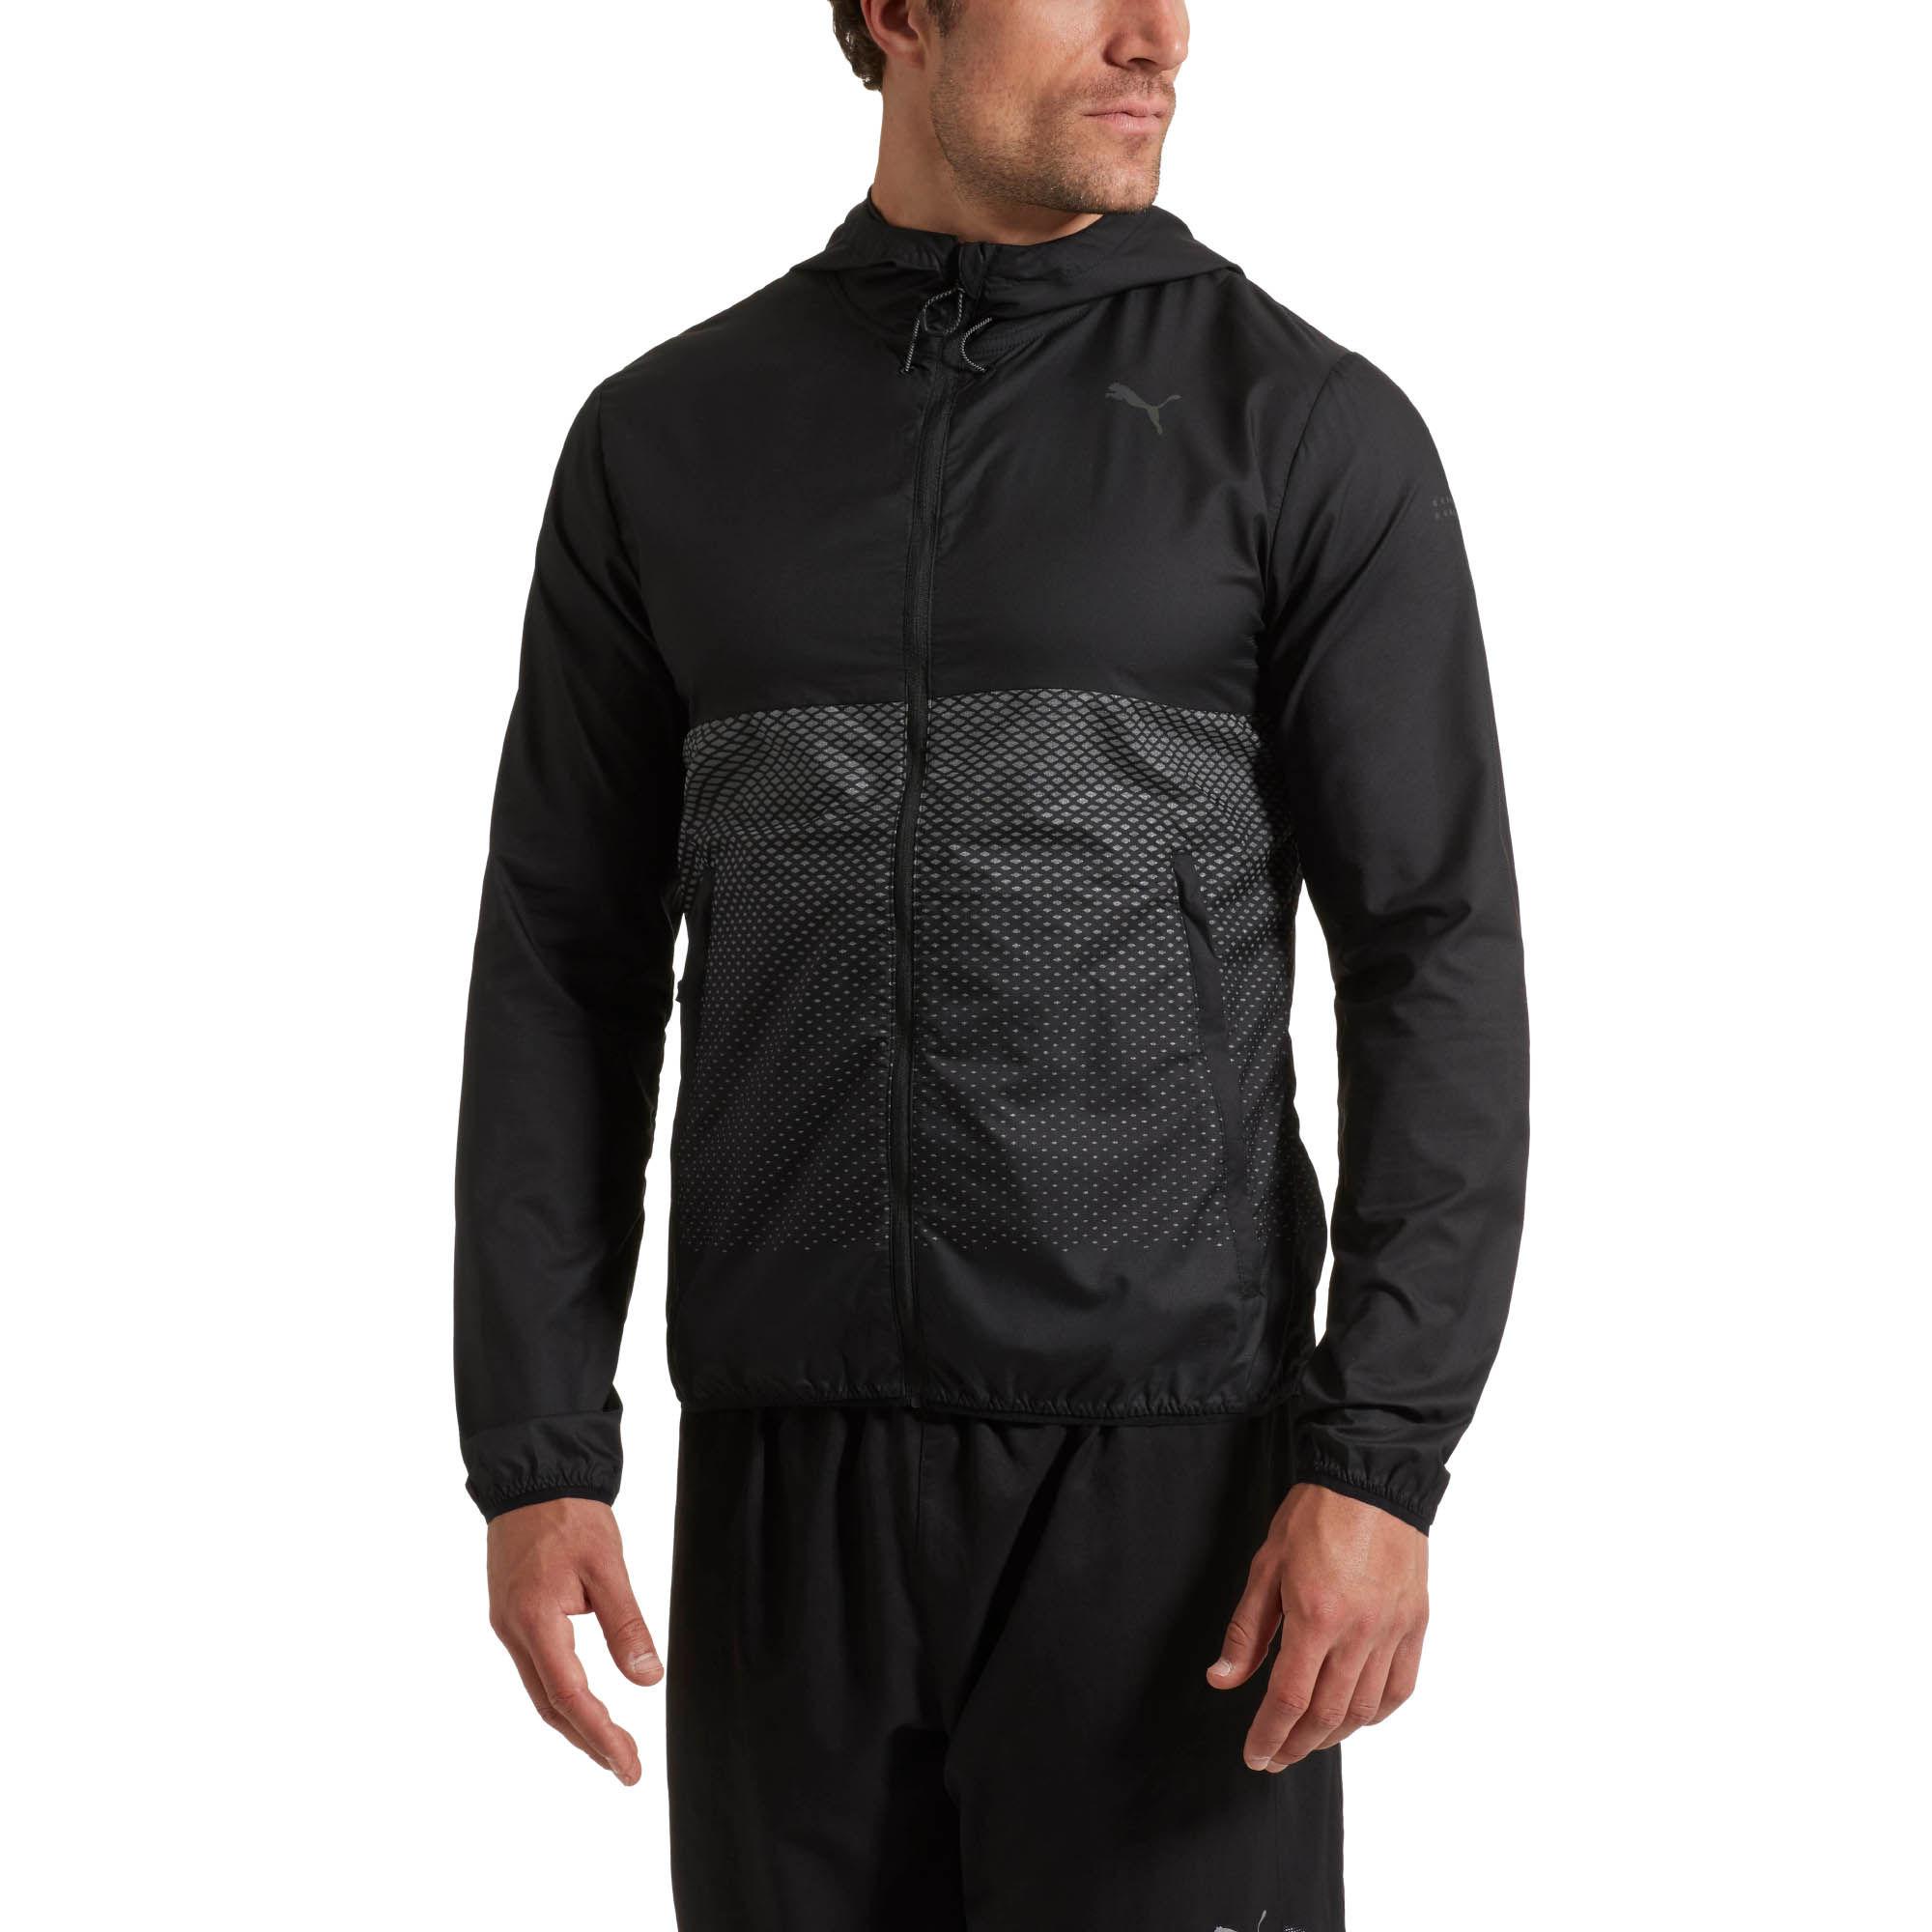 PUMA Synthetic Running Nightcat Jacket in Black for Men - Lyst